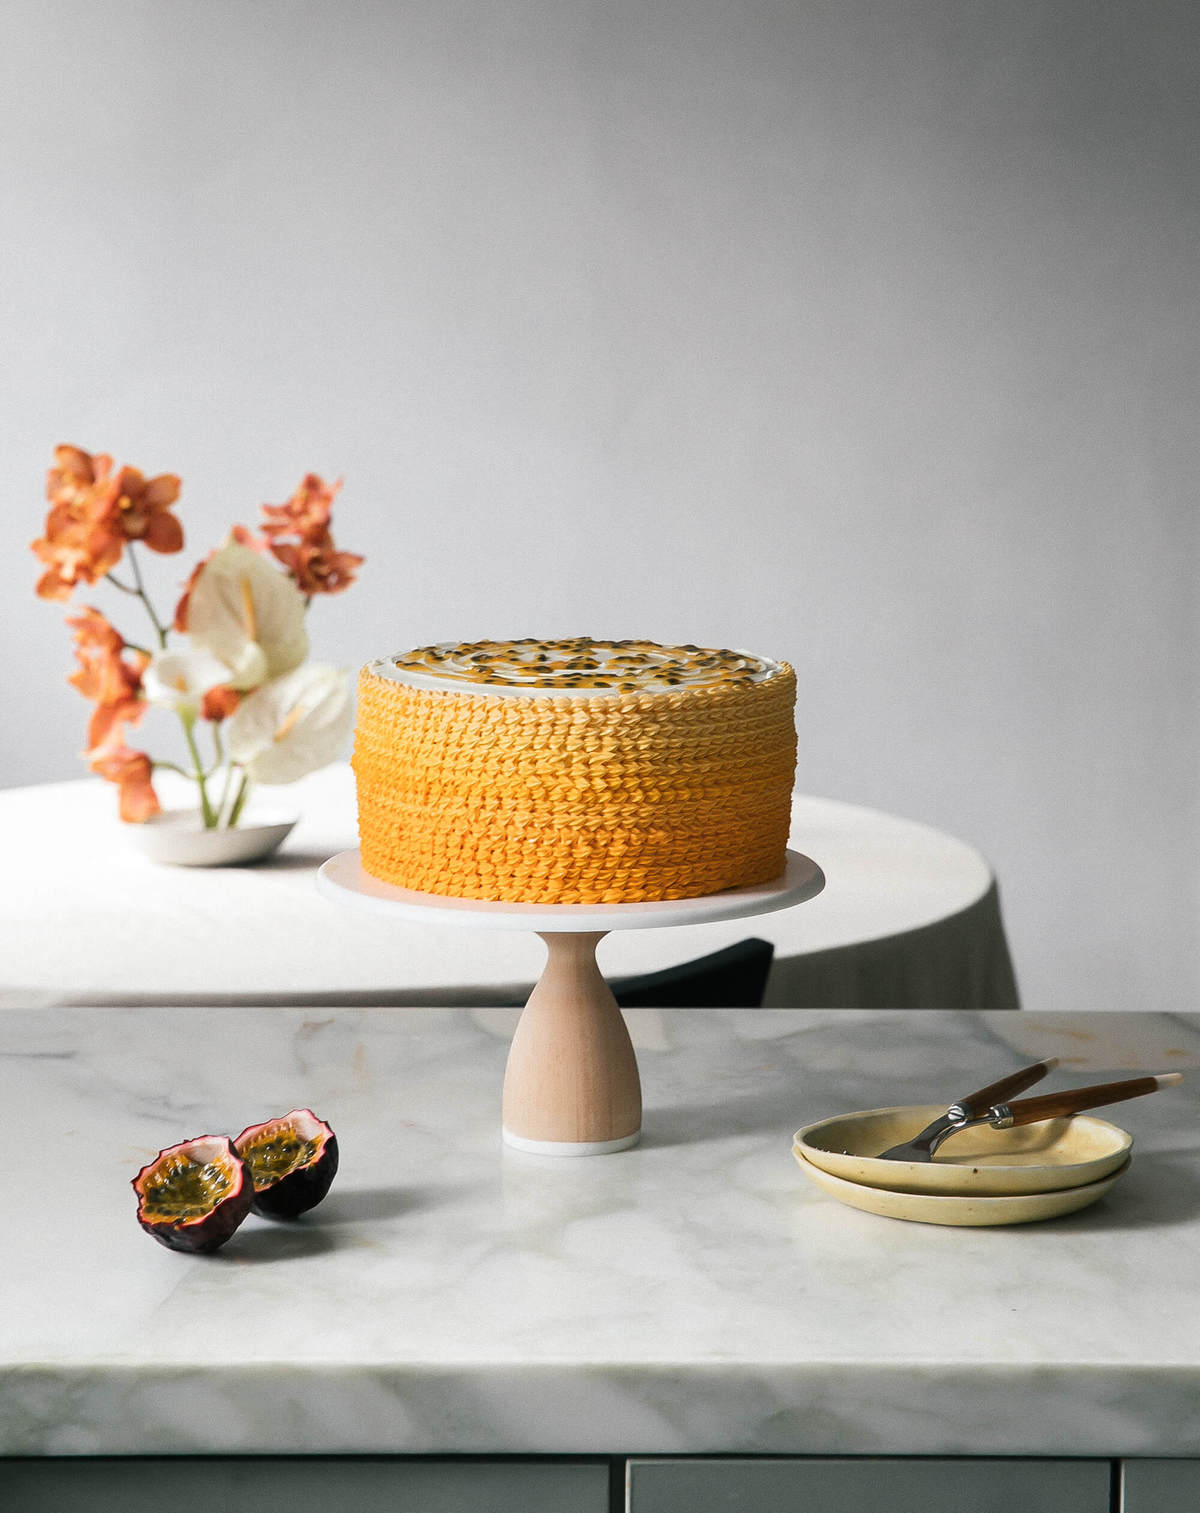 Passionfruit Vanilla Layer Cake Recipe - A Cozy Kitchen